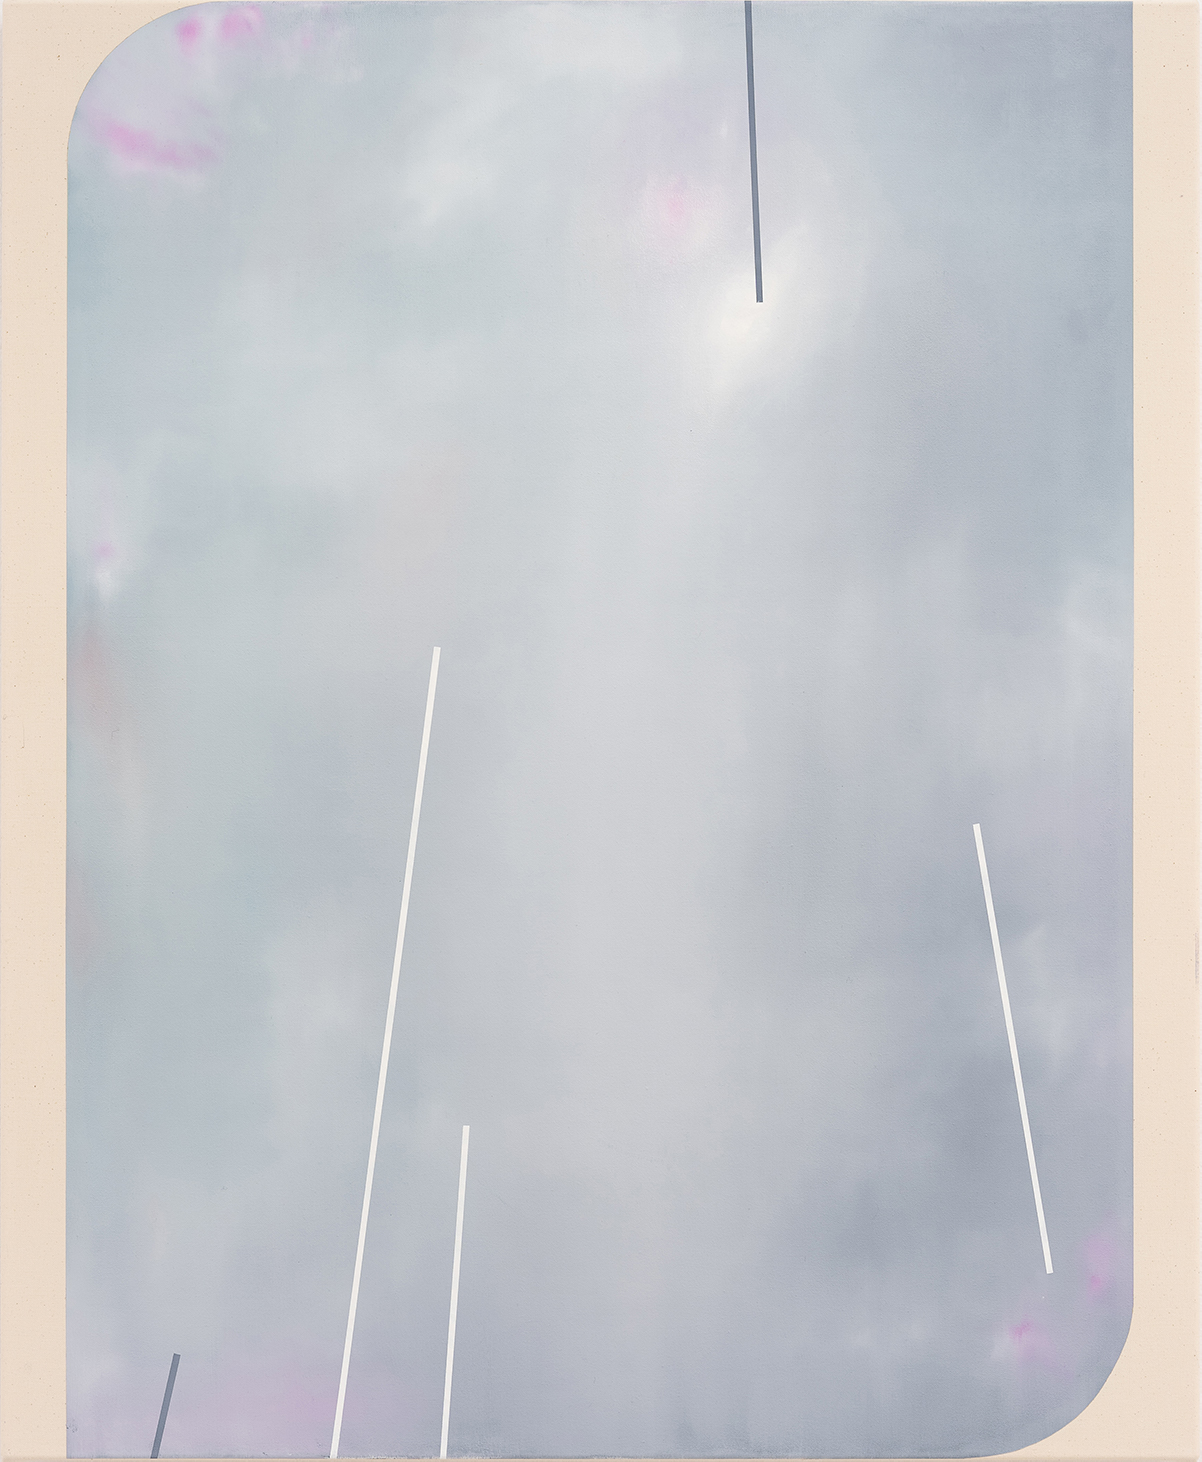 Kate Andrews, skybody, 2021, Oil on canvas, 110 x 90 cm